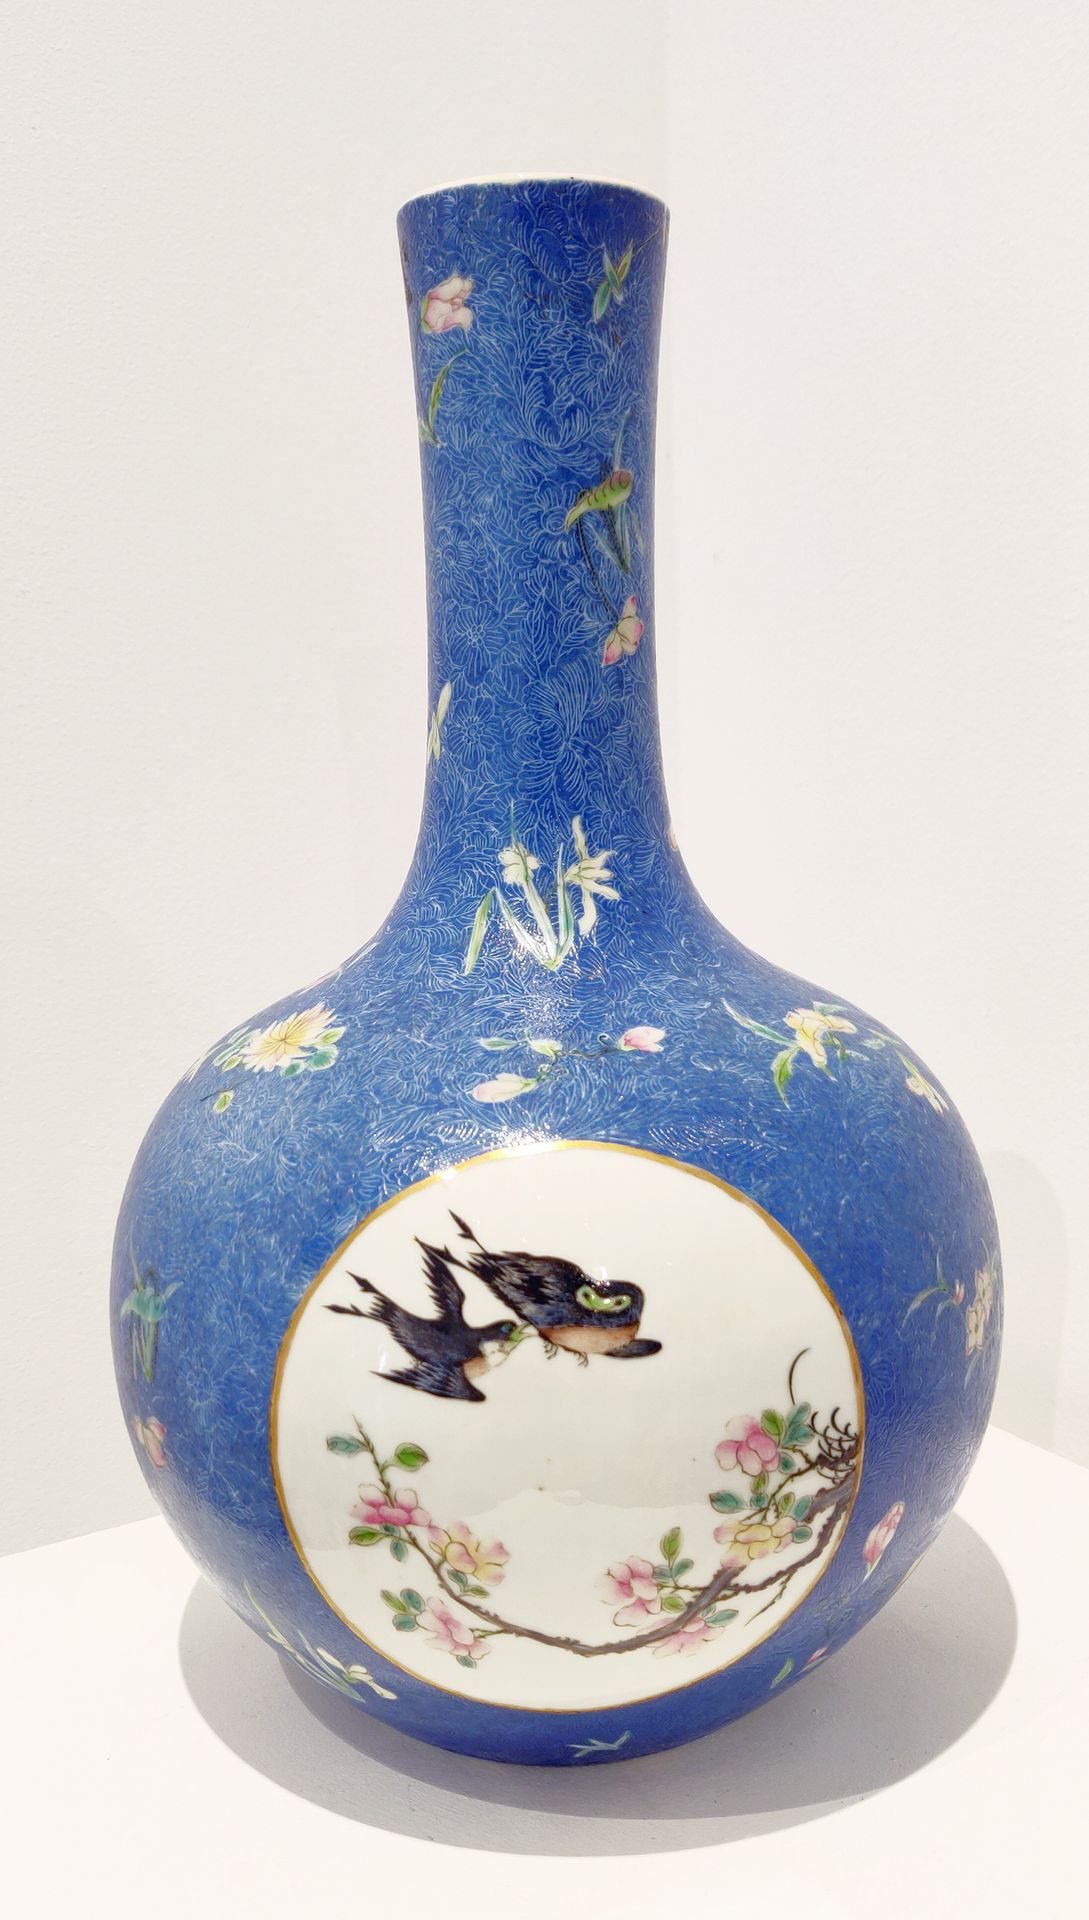 Null 
中国，19世纪

罕见的天秋坪花瓶，蓝底，有刻痕装饰的储备鸟。 

底座下有乾隆时期的天书款。

高度：33厘米。高度：33厘米